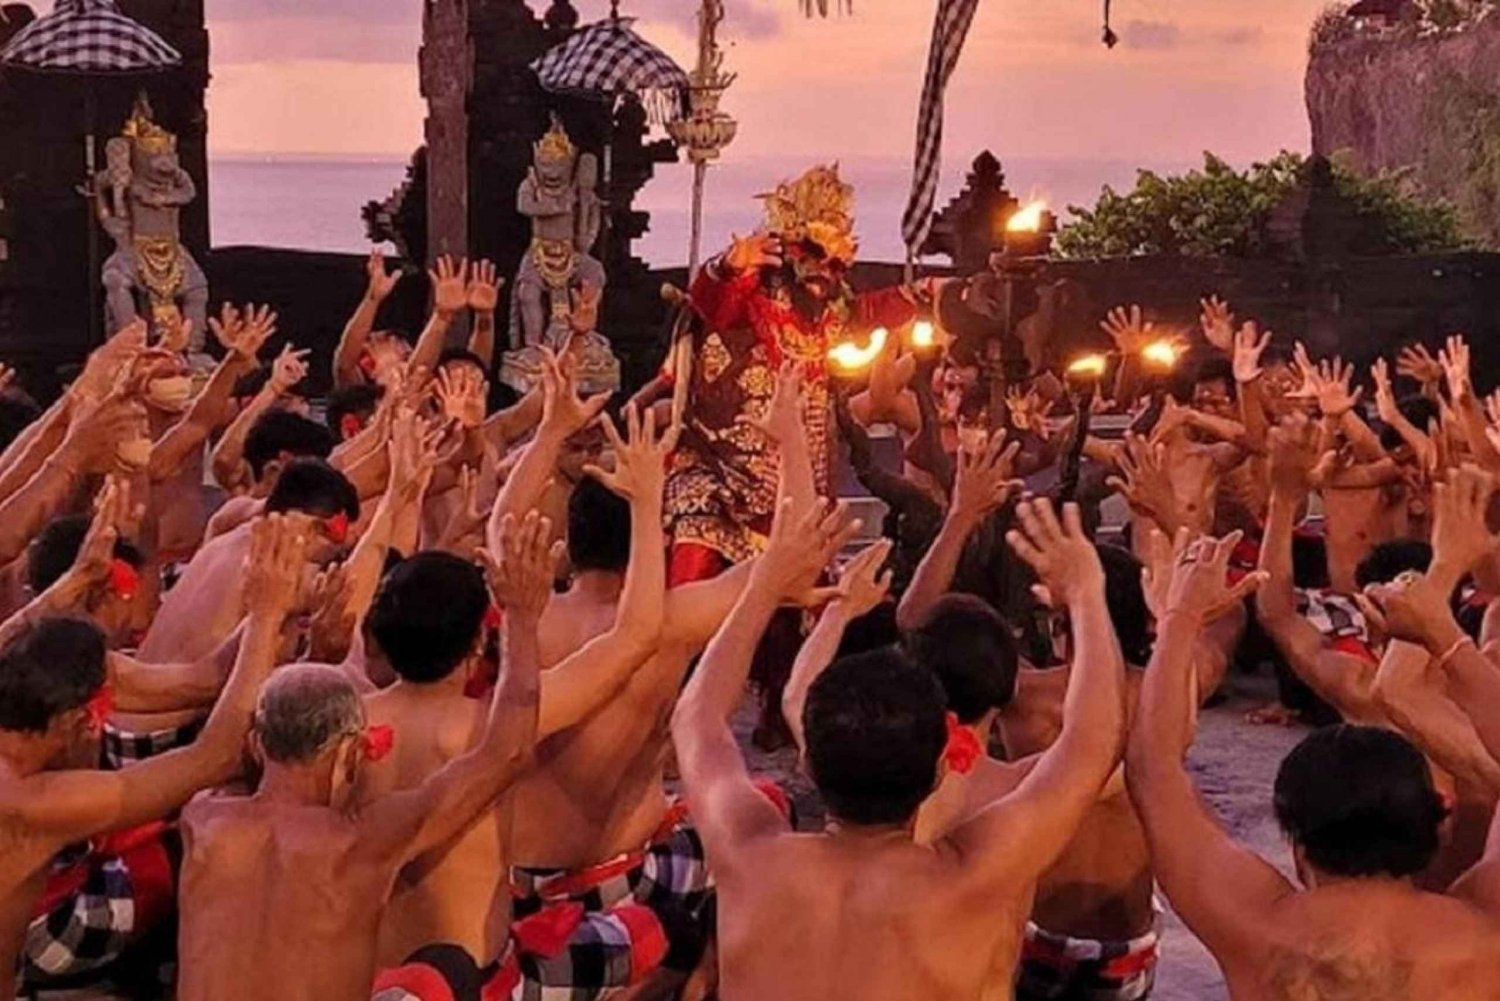 Bali: Uluwatu Temple & Kecak Fire Dance Show Tour: Half-Day Uluwatu Temple & Kecak Fire Dance Show Tour